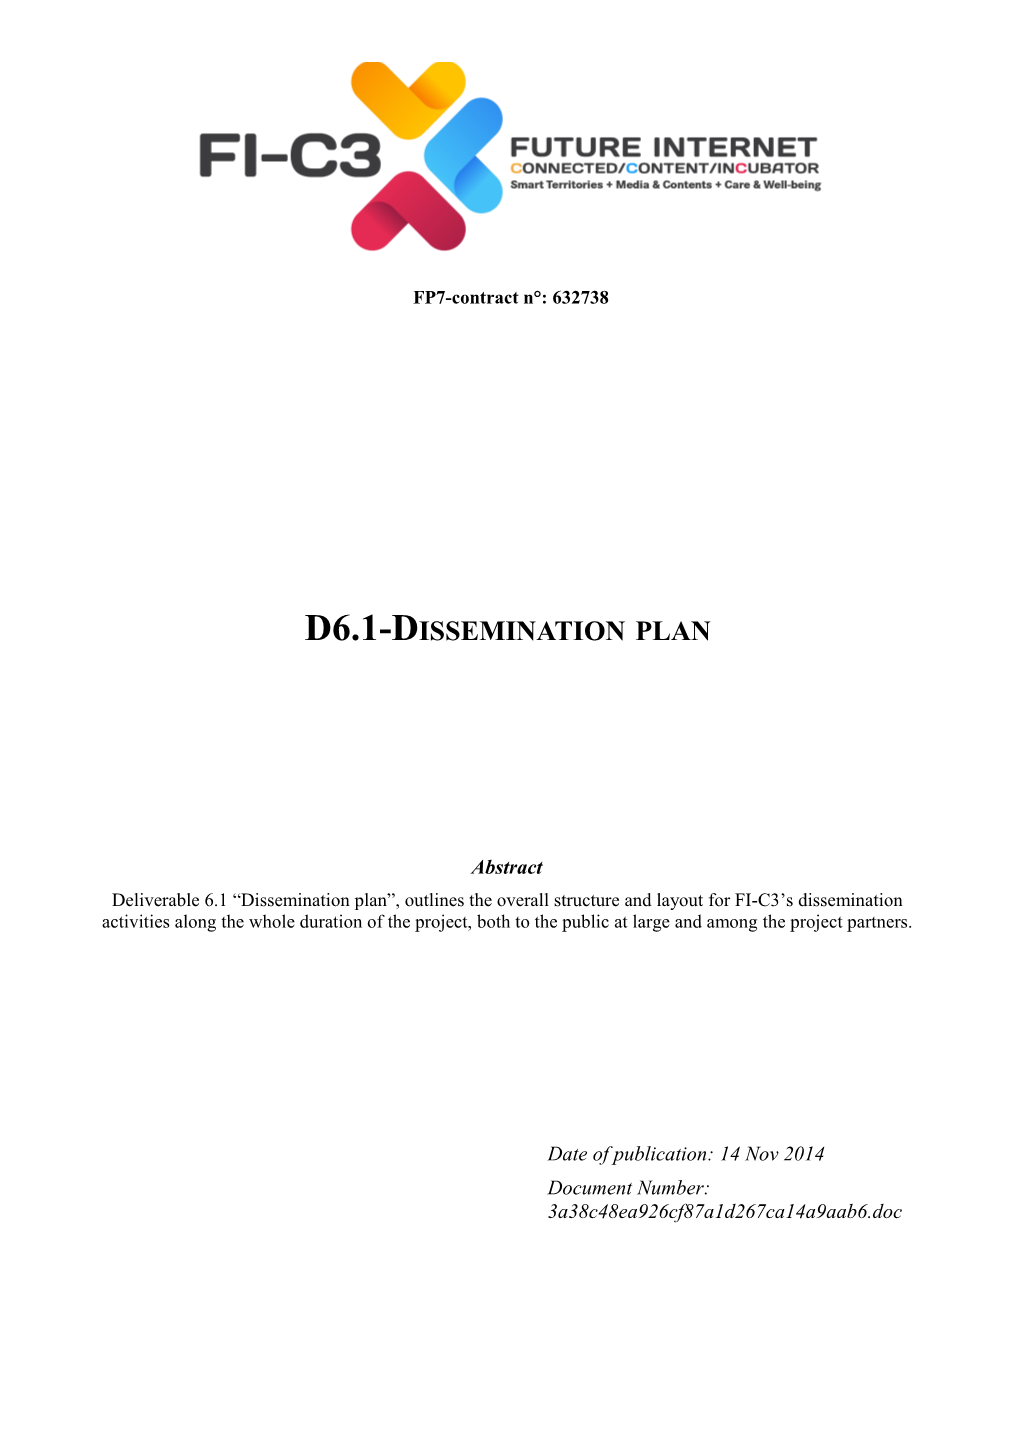 D6.1-Dissemination Planfi-C3-007-V3 0